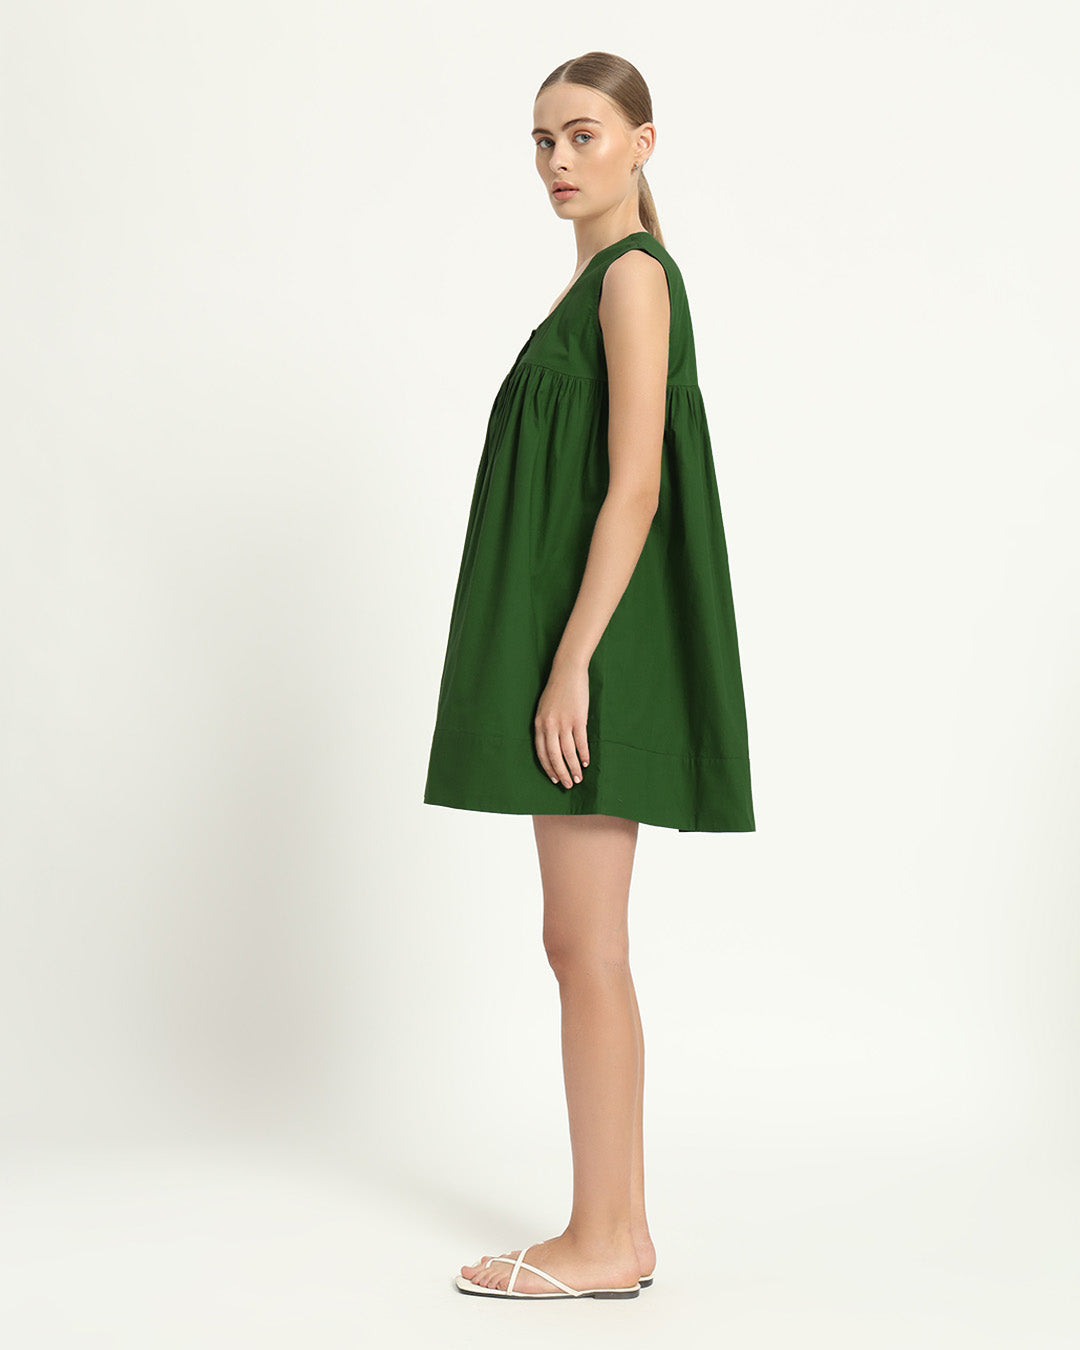 The Jois Emerald Cotton Dress